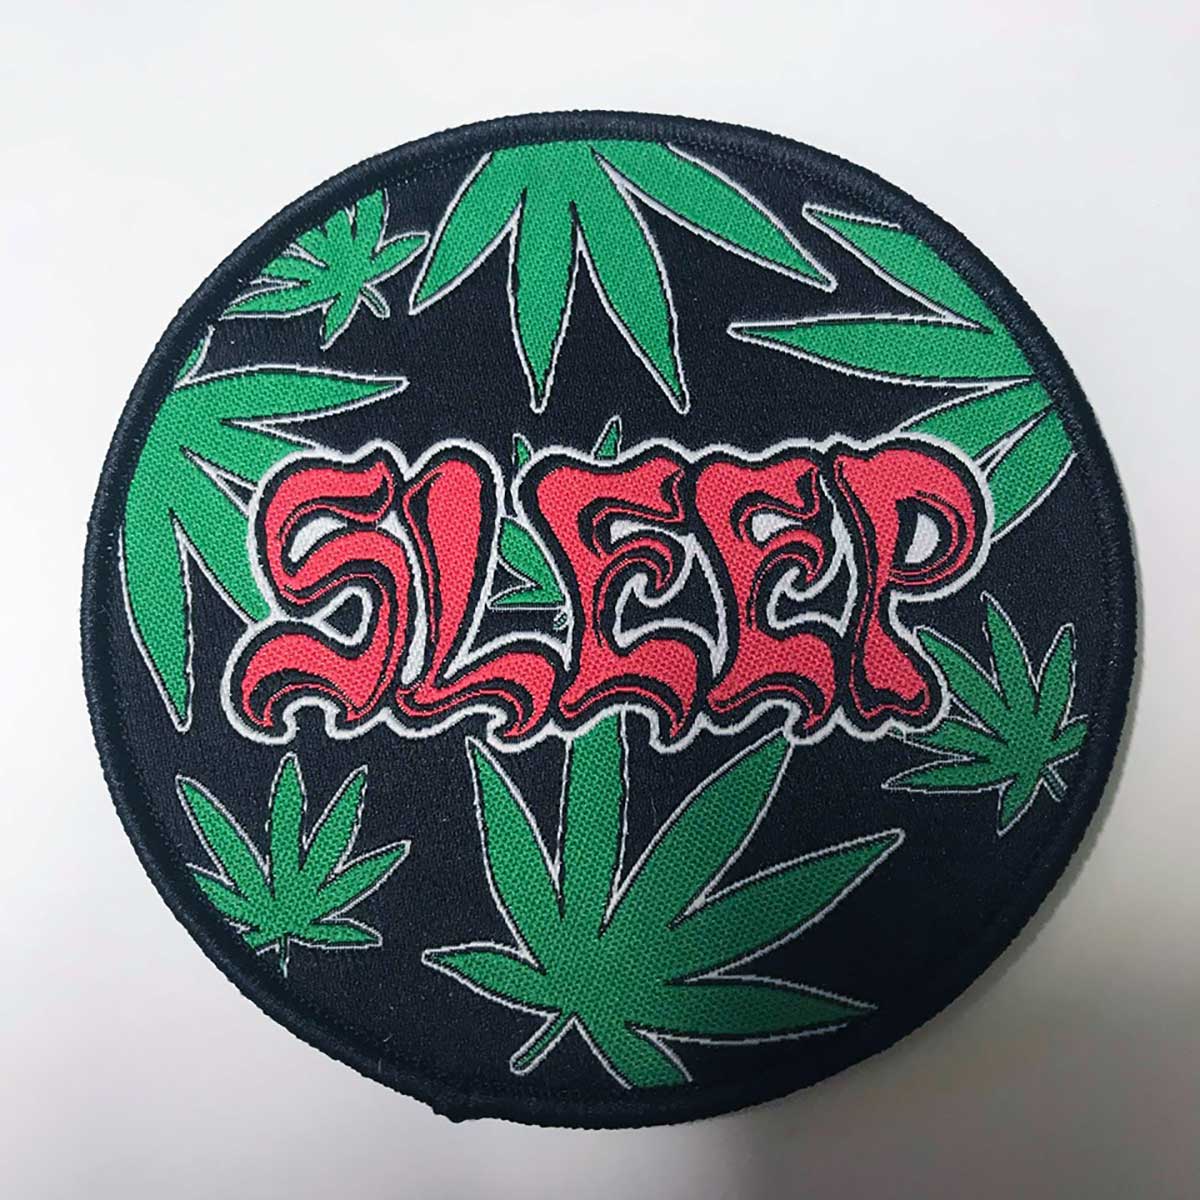 Sleep "Weed" Woven Patch